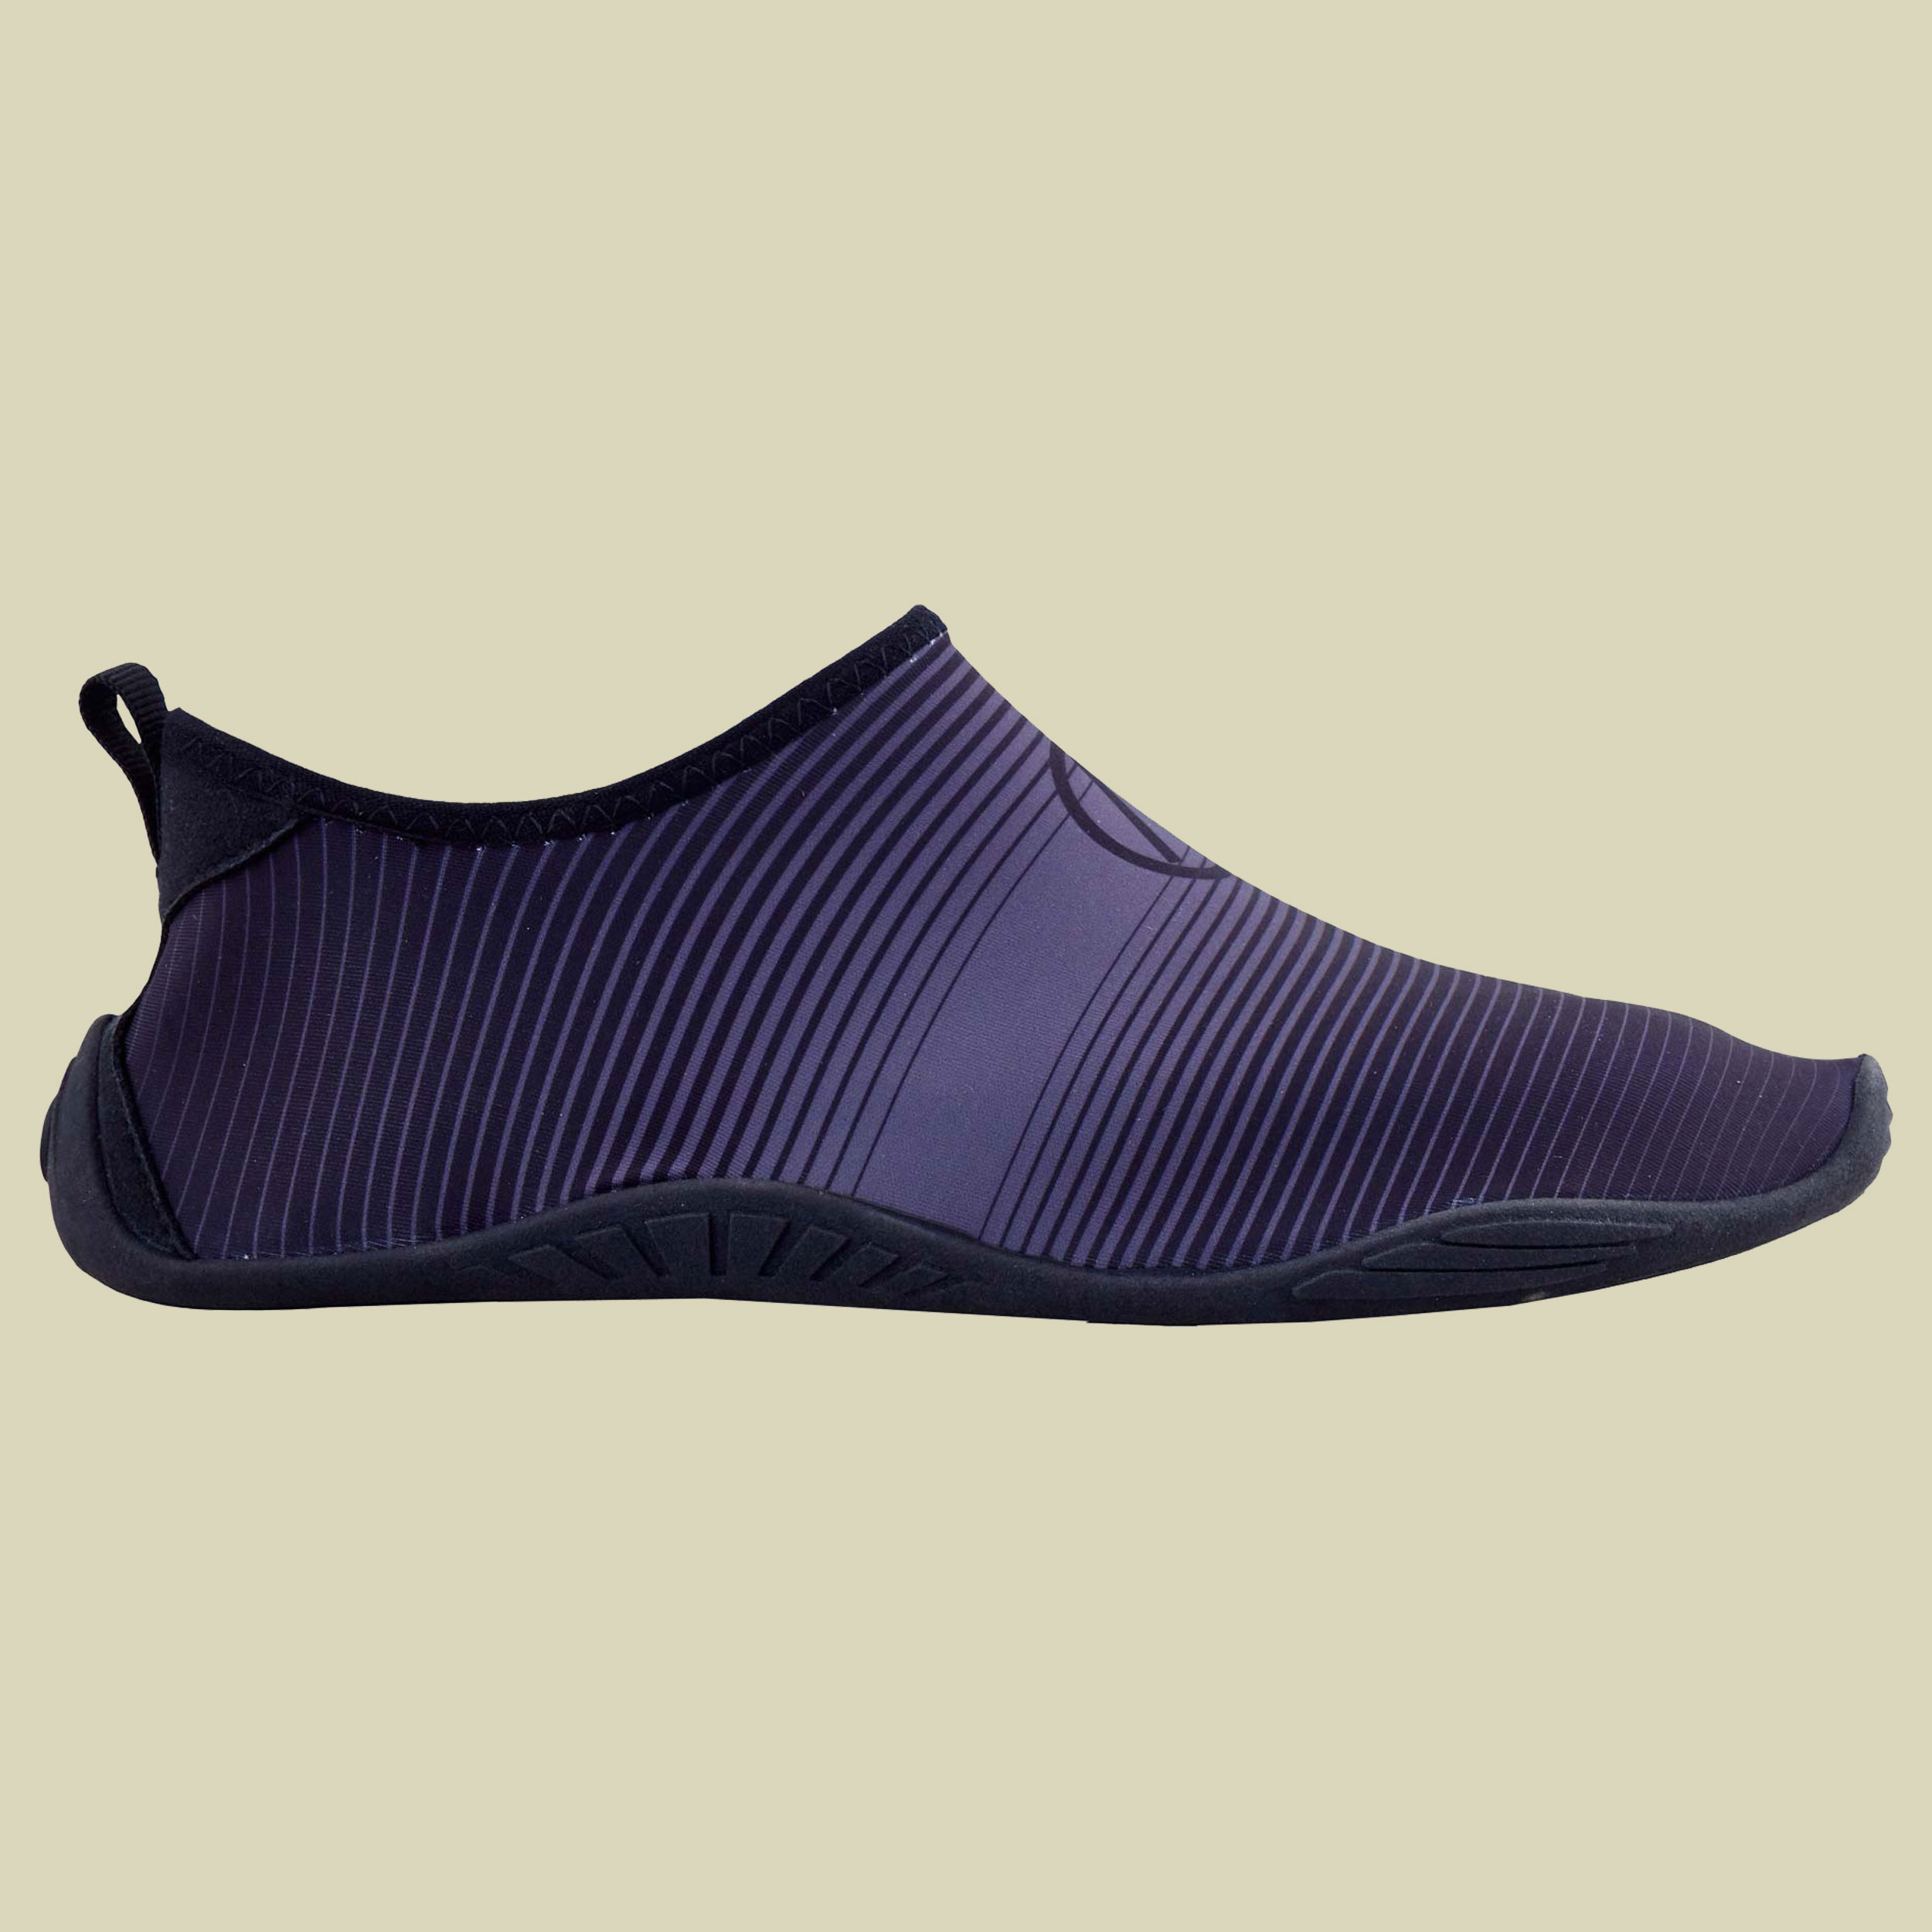 Spartan Barfuß-Schuhe Größe 36-37 Farbe astro black